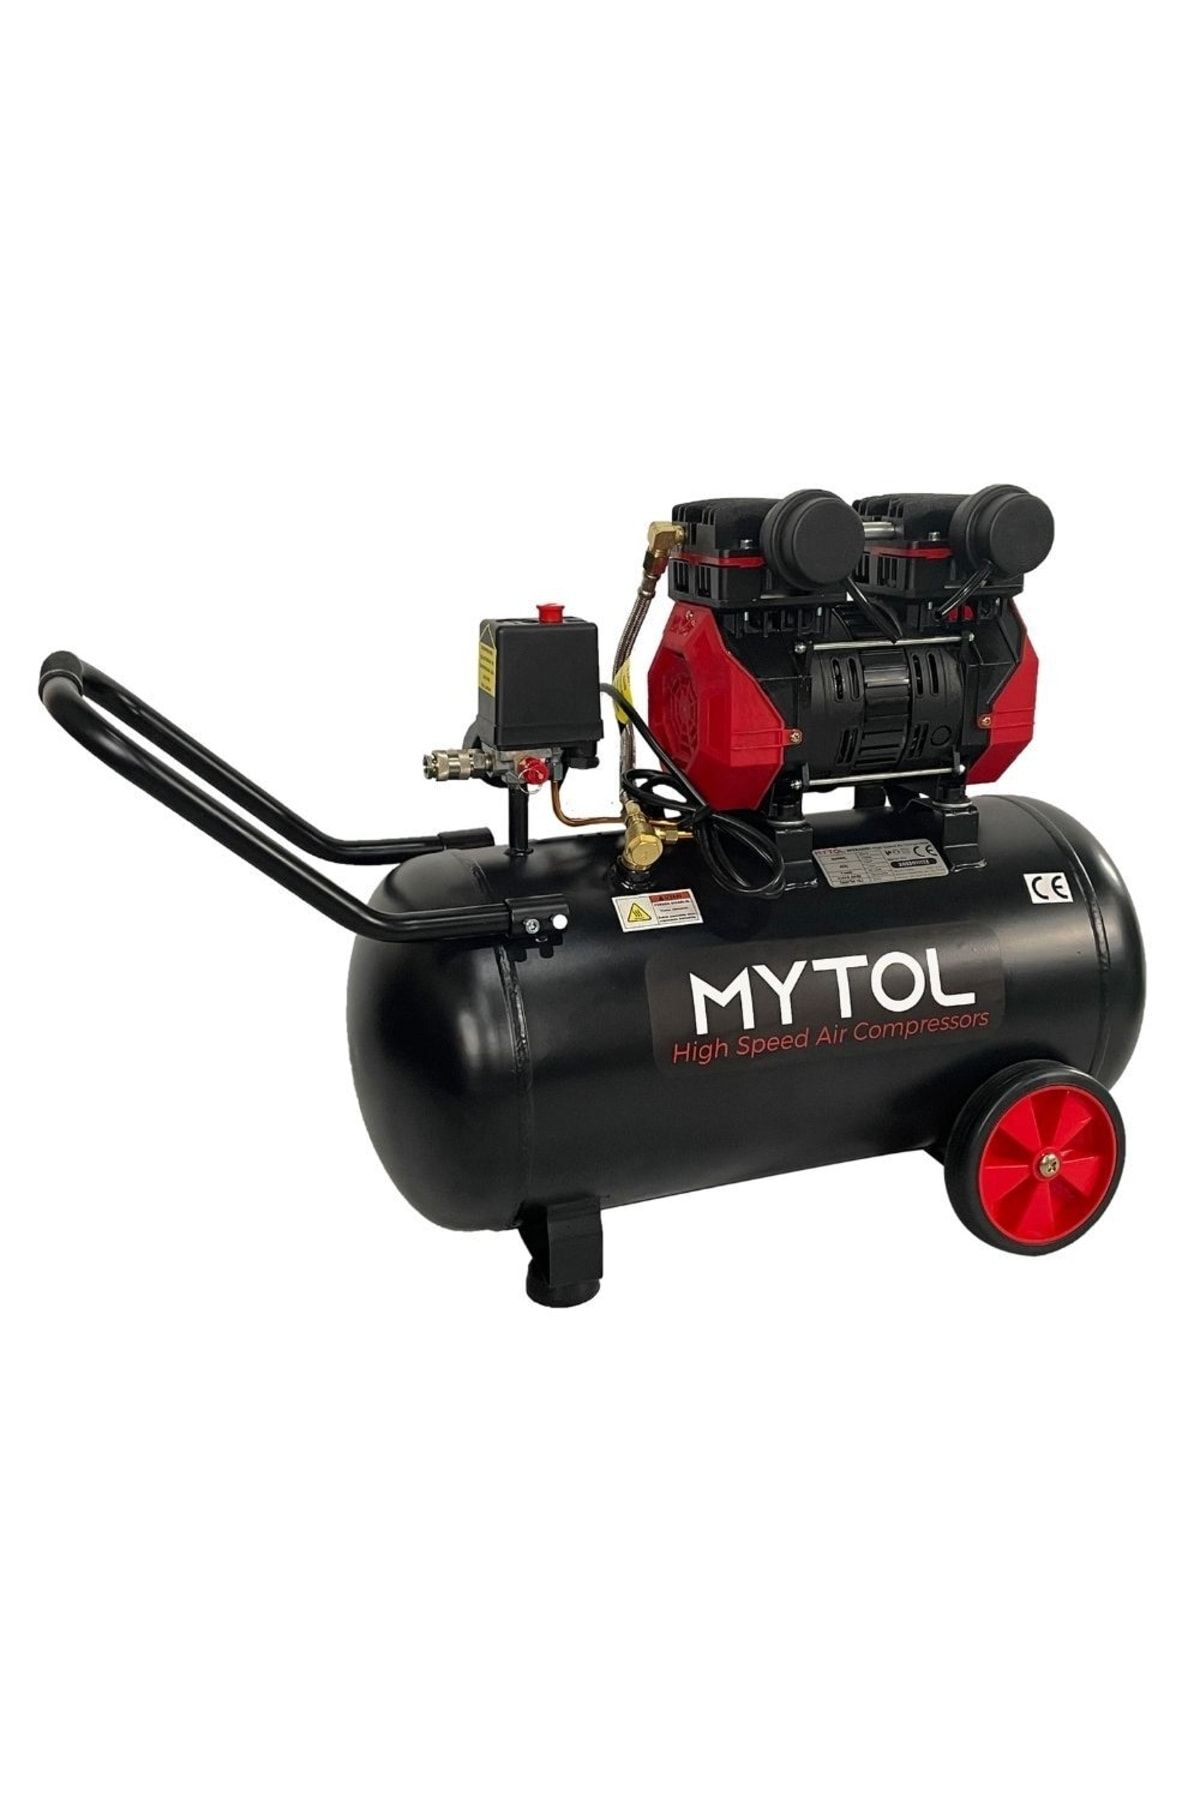 MYTOL Myk0502 Yüksek Hızlı Yağsız 50lt 2hp Hava Kompresörü